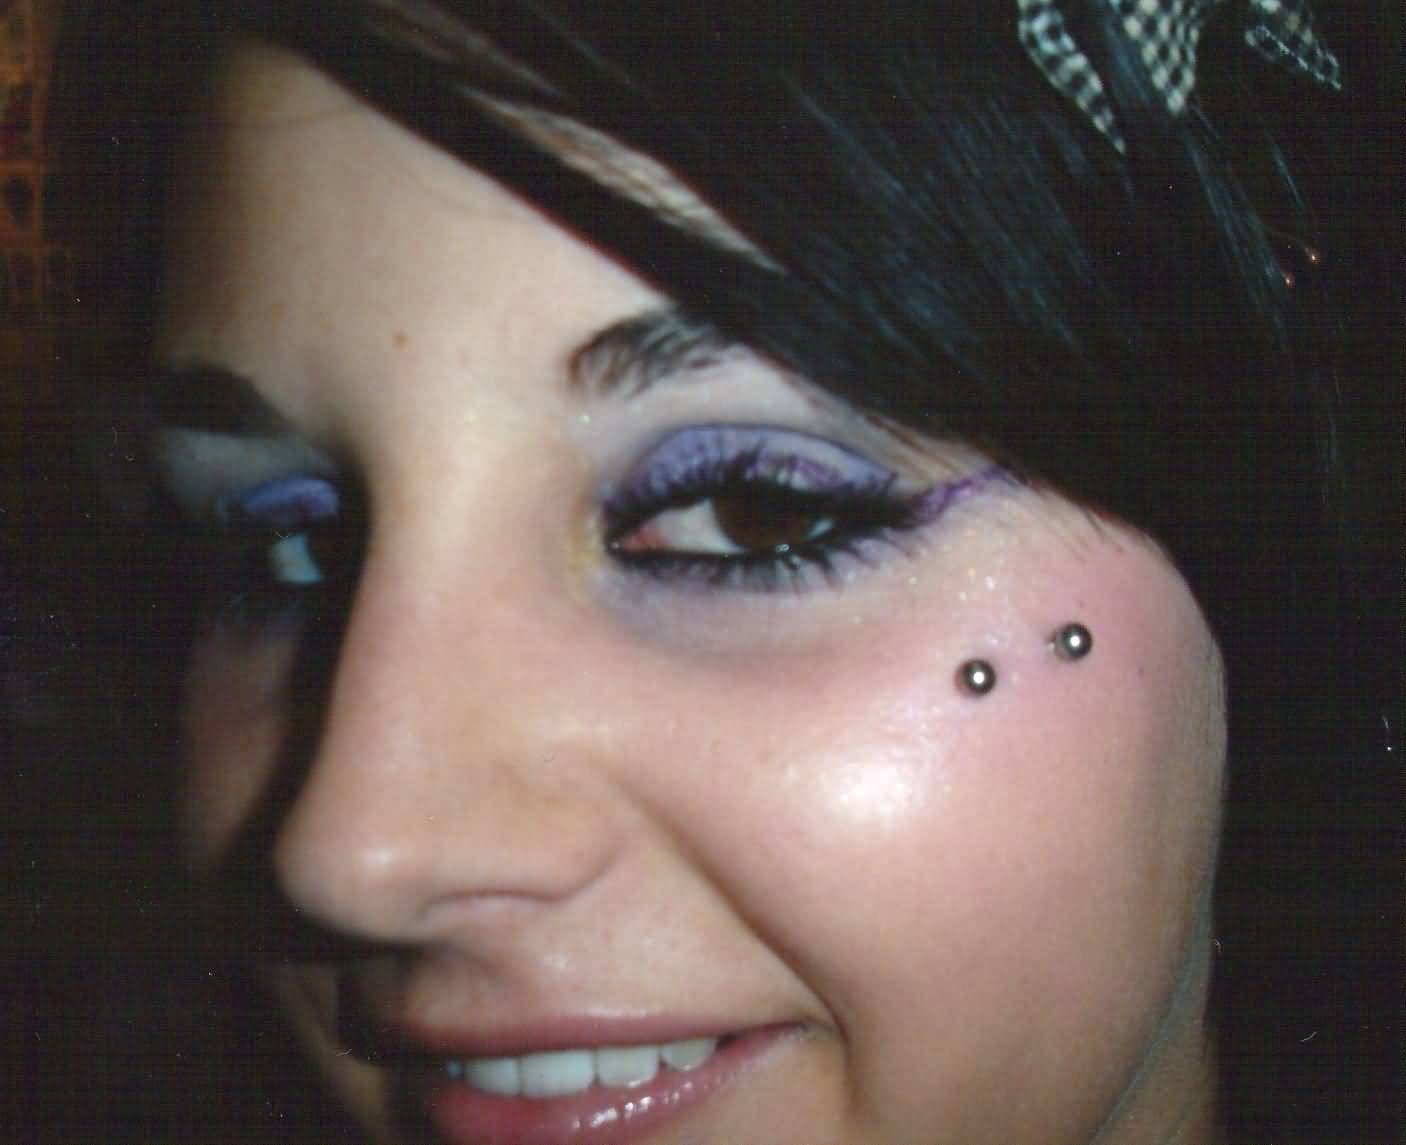 Surface Piercing On Girl Face By Clinton Osborne Of Eternal Body Piercing In Shepparton Australia